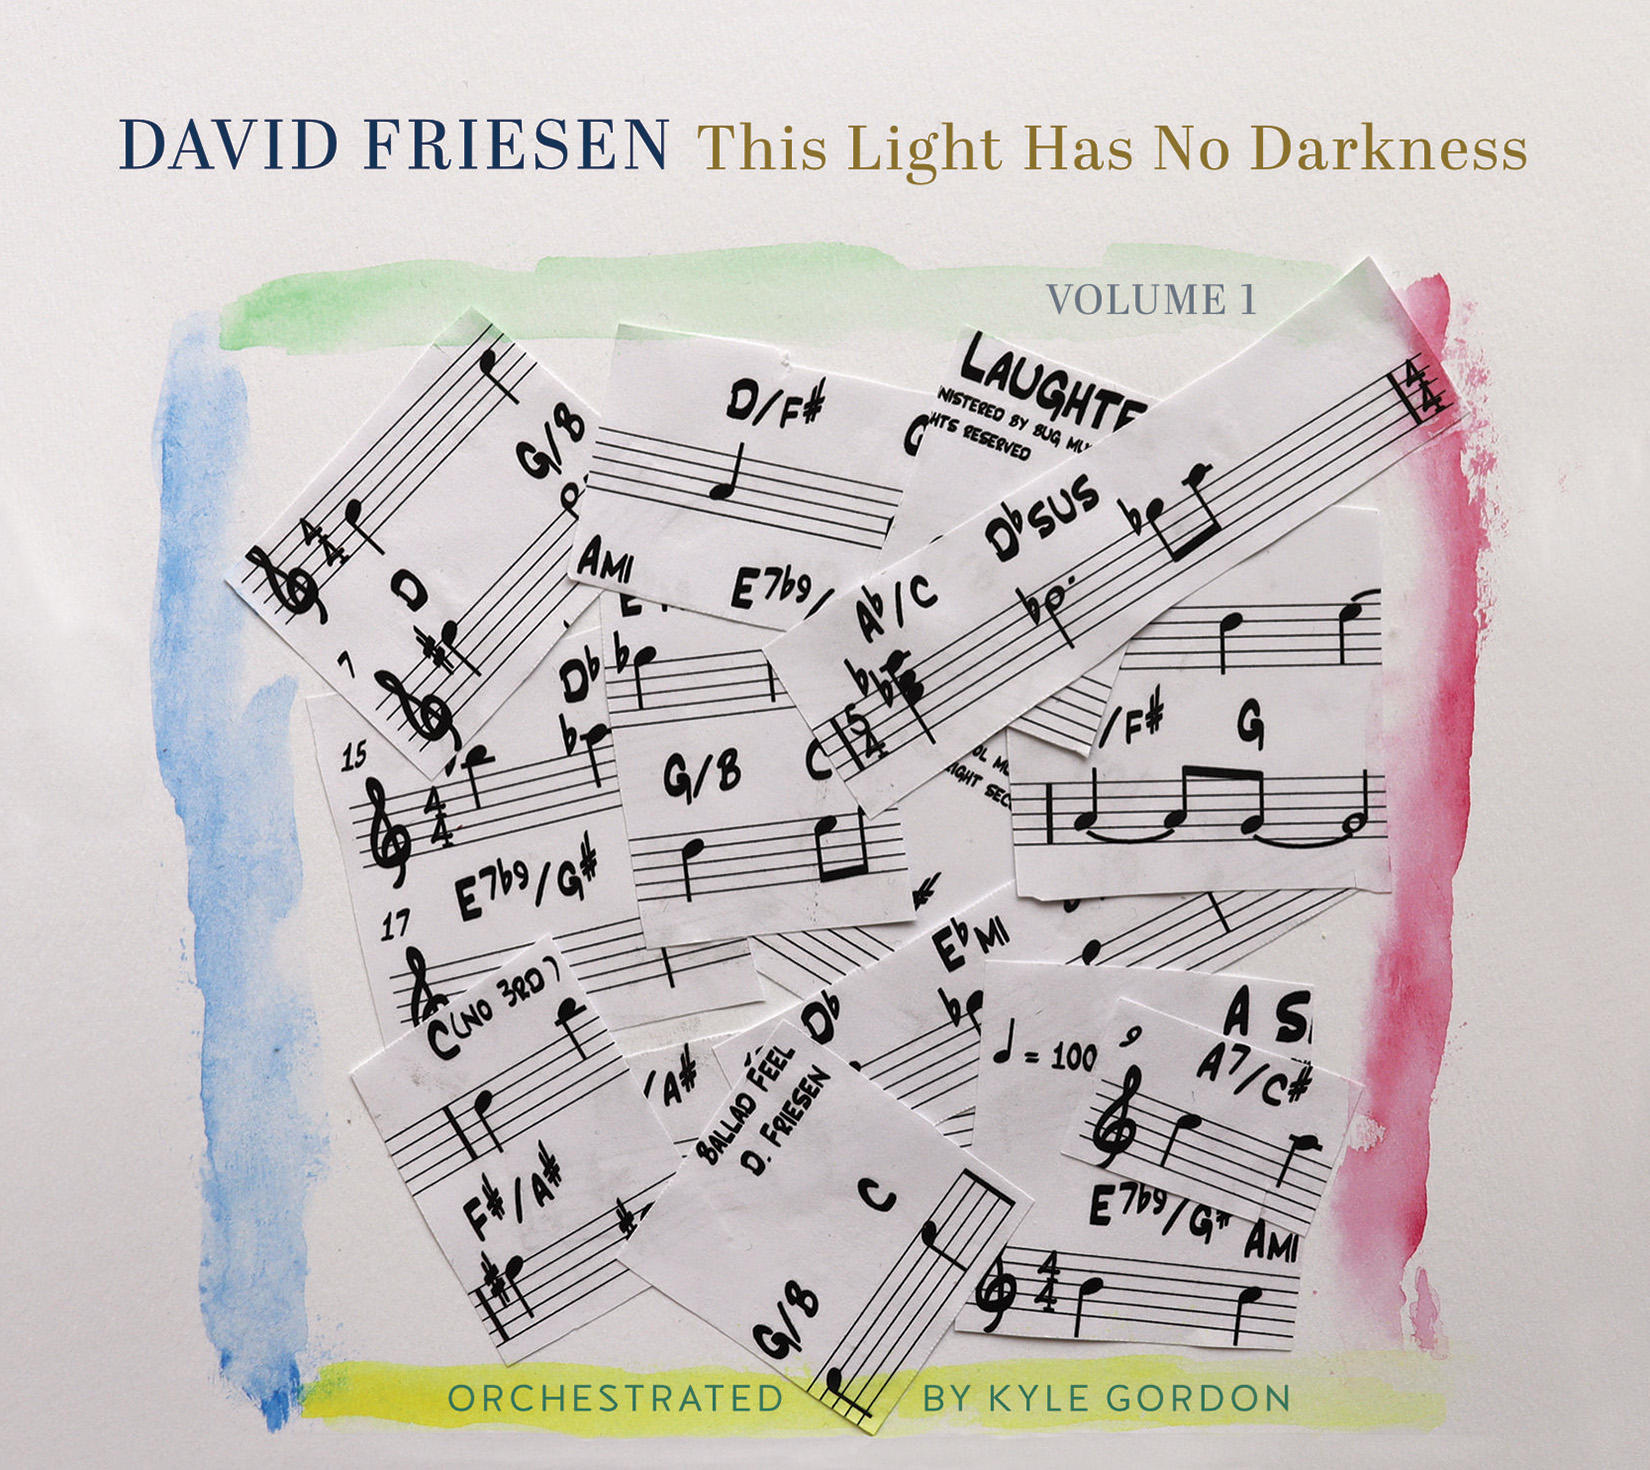 https://downbeat.com/images/reviews/EP_82888_DAVID_FRIESEN_-_This_Light_Has_No_Darkness%2C_Volume_1_-_album_cover.jpg